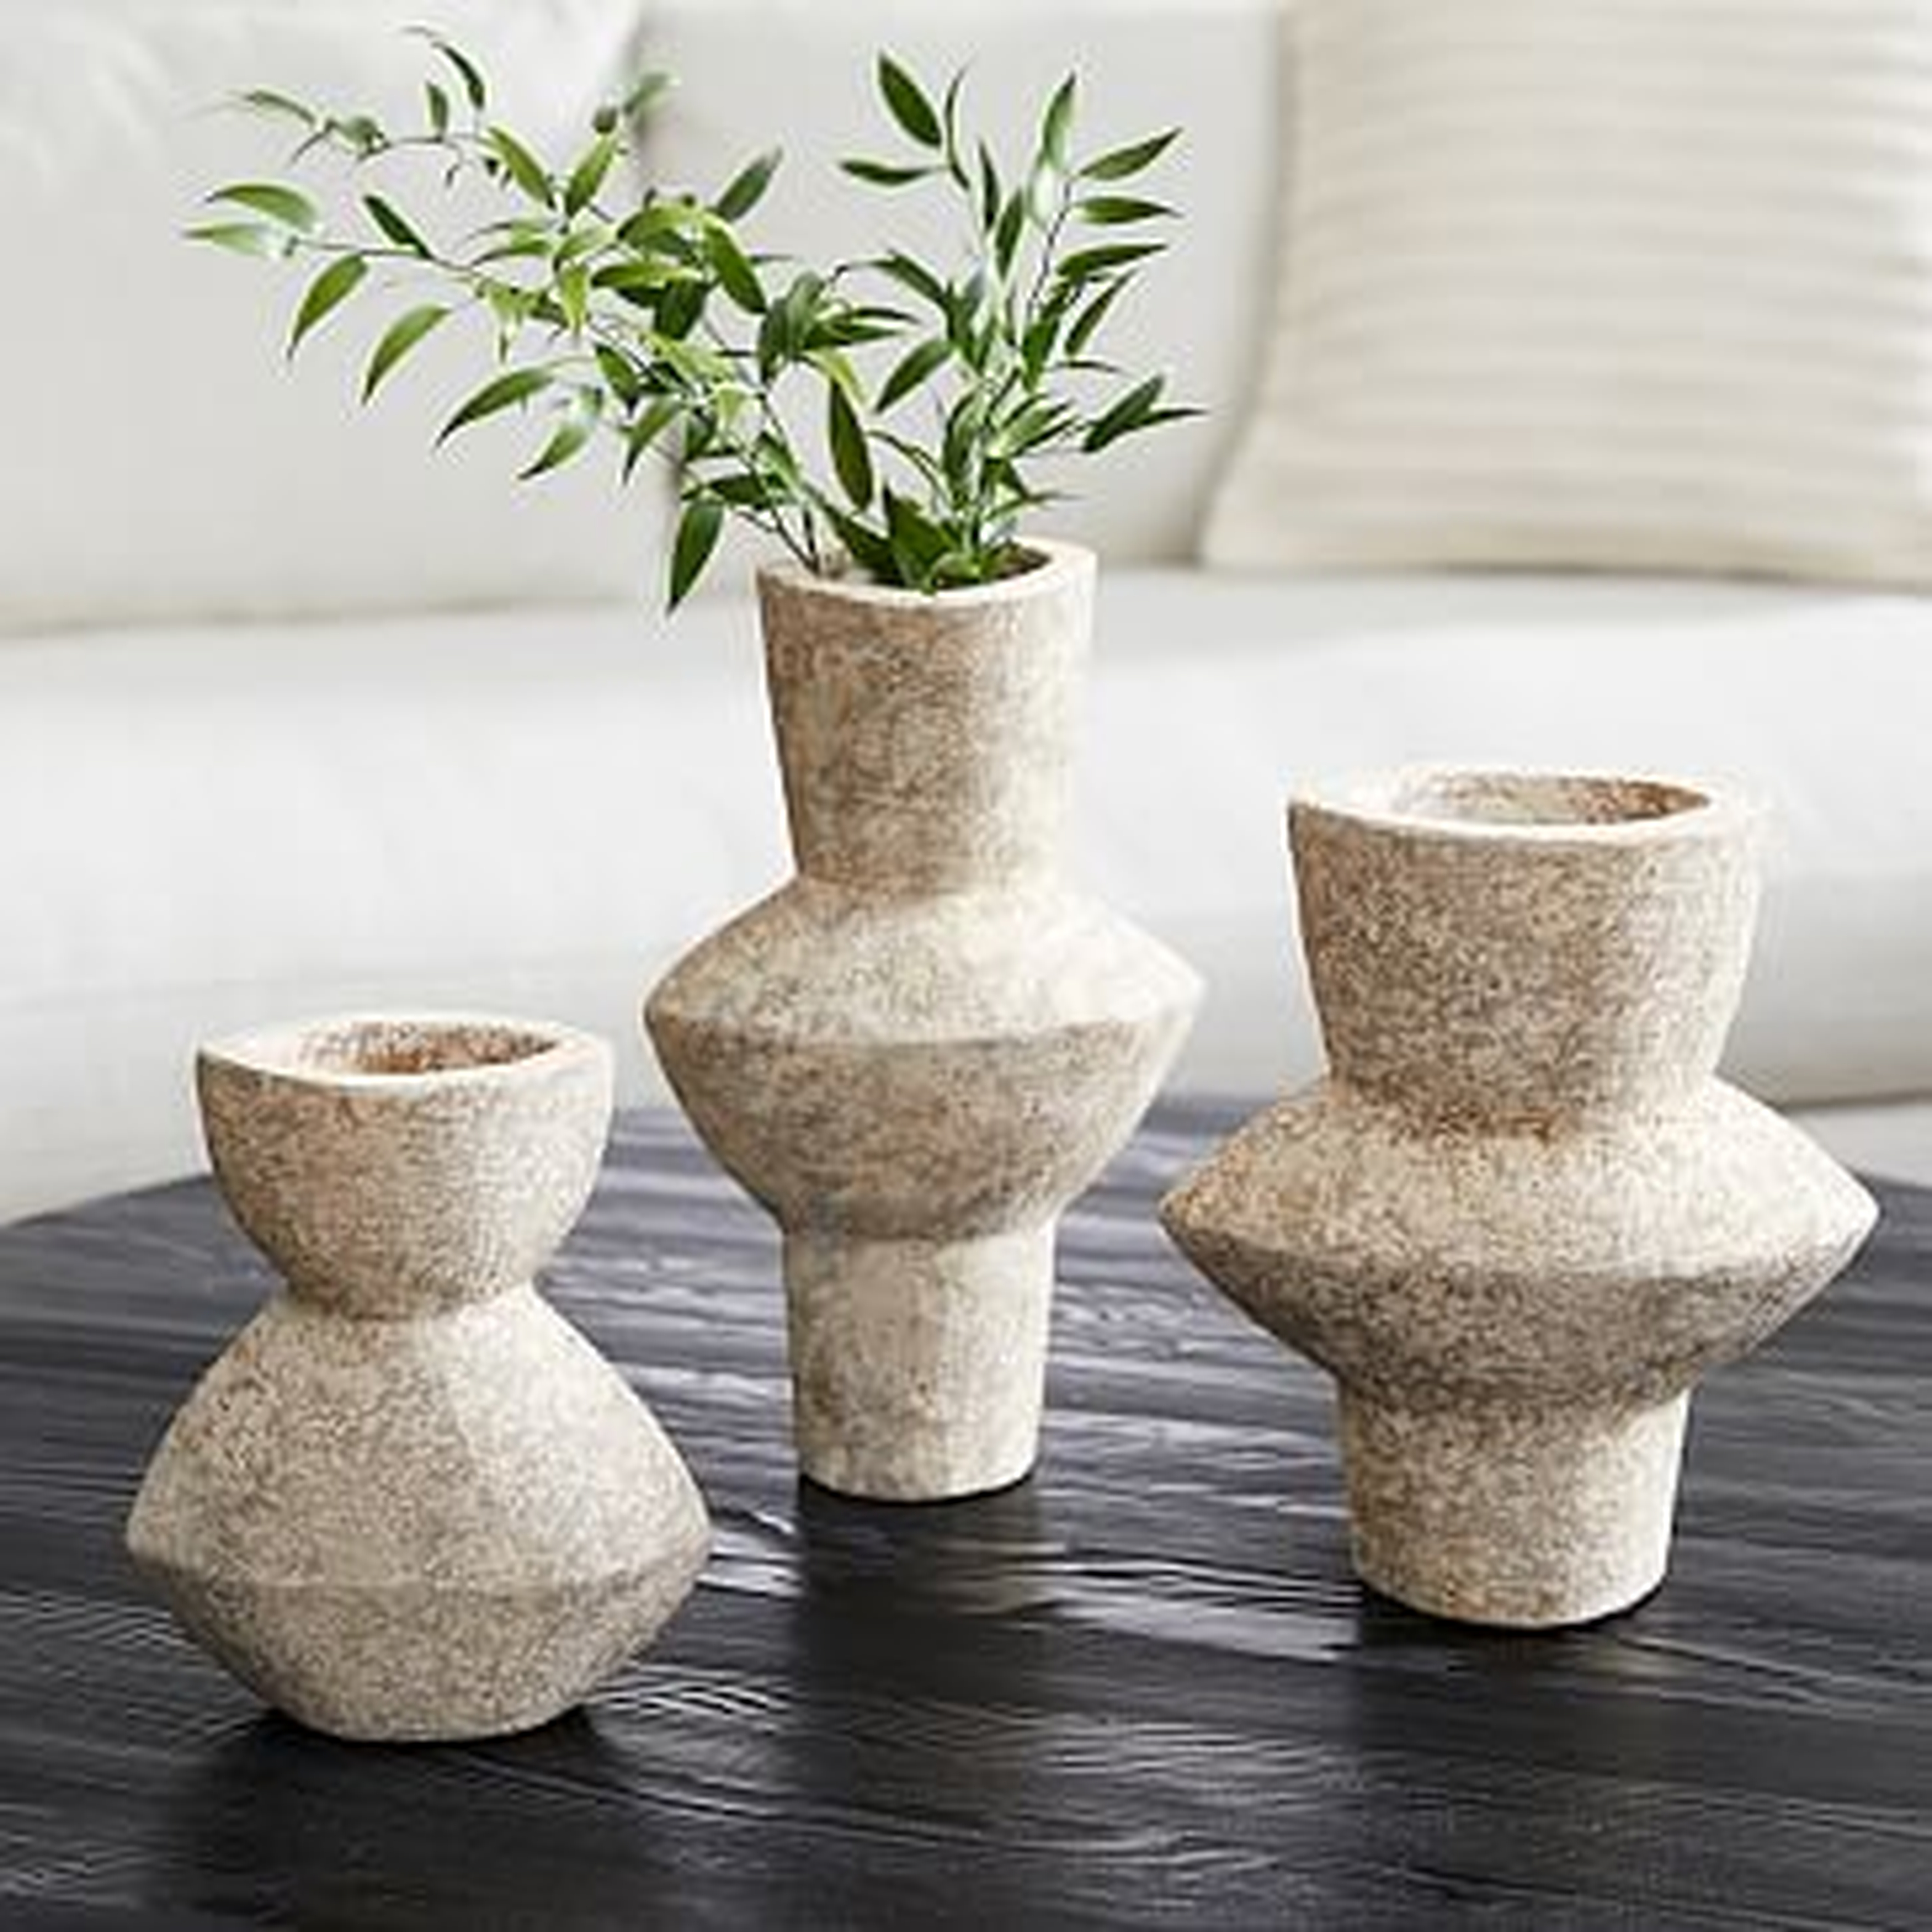 Totem Ceramic Vases, Grey, Small Medium Large, Set of 3 - West Elm